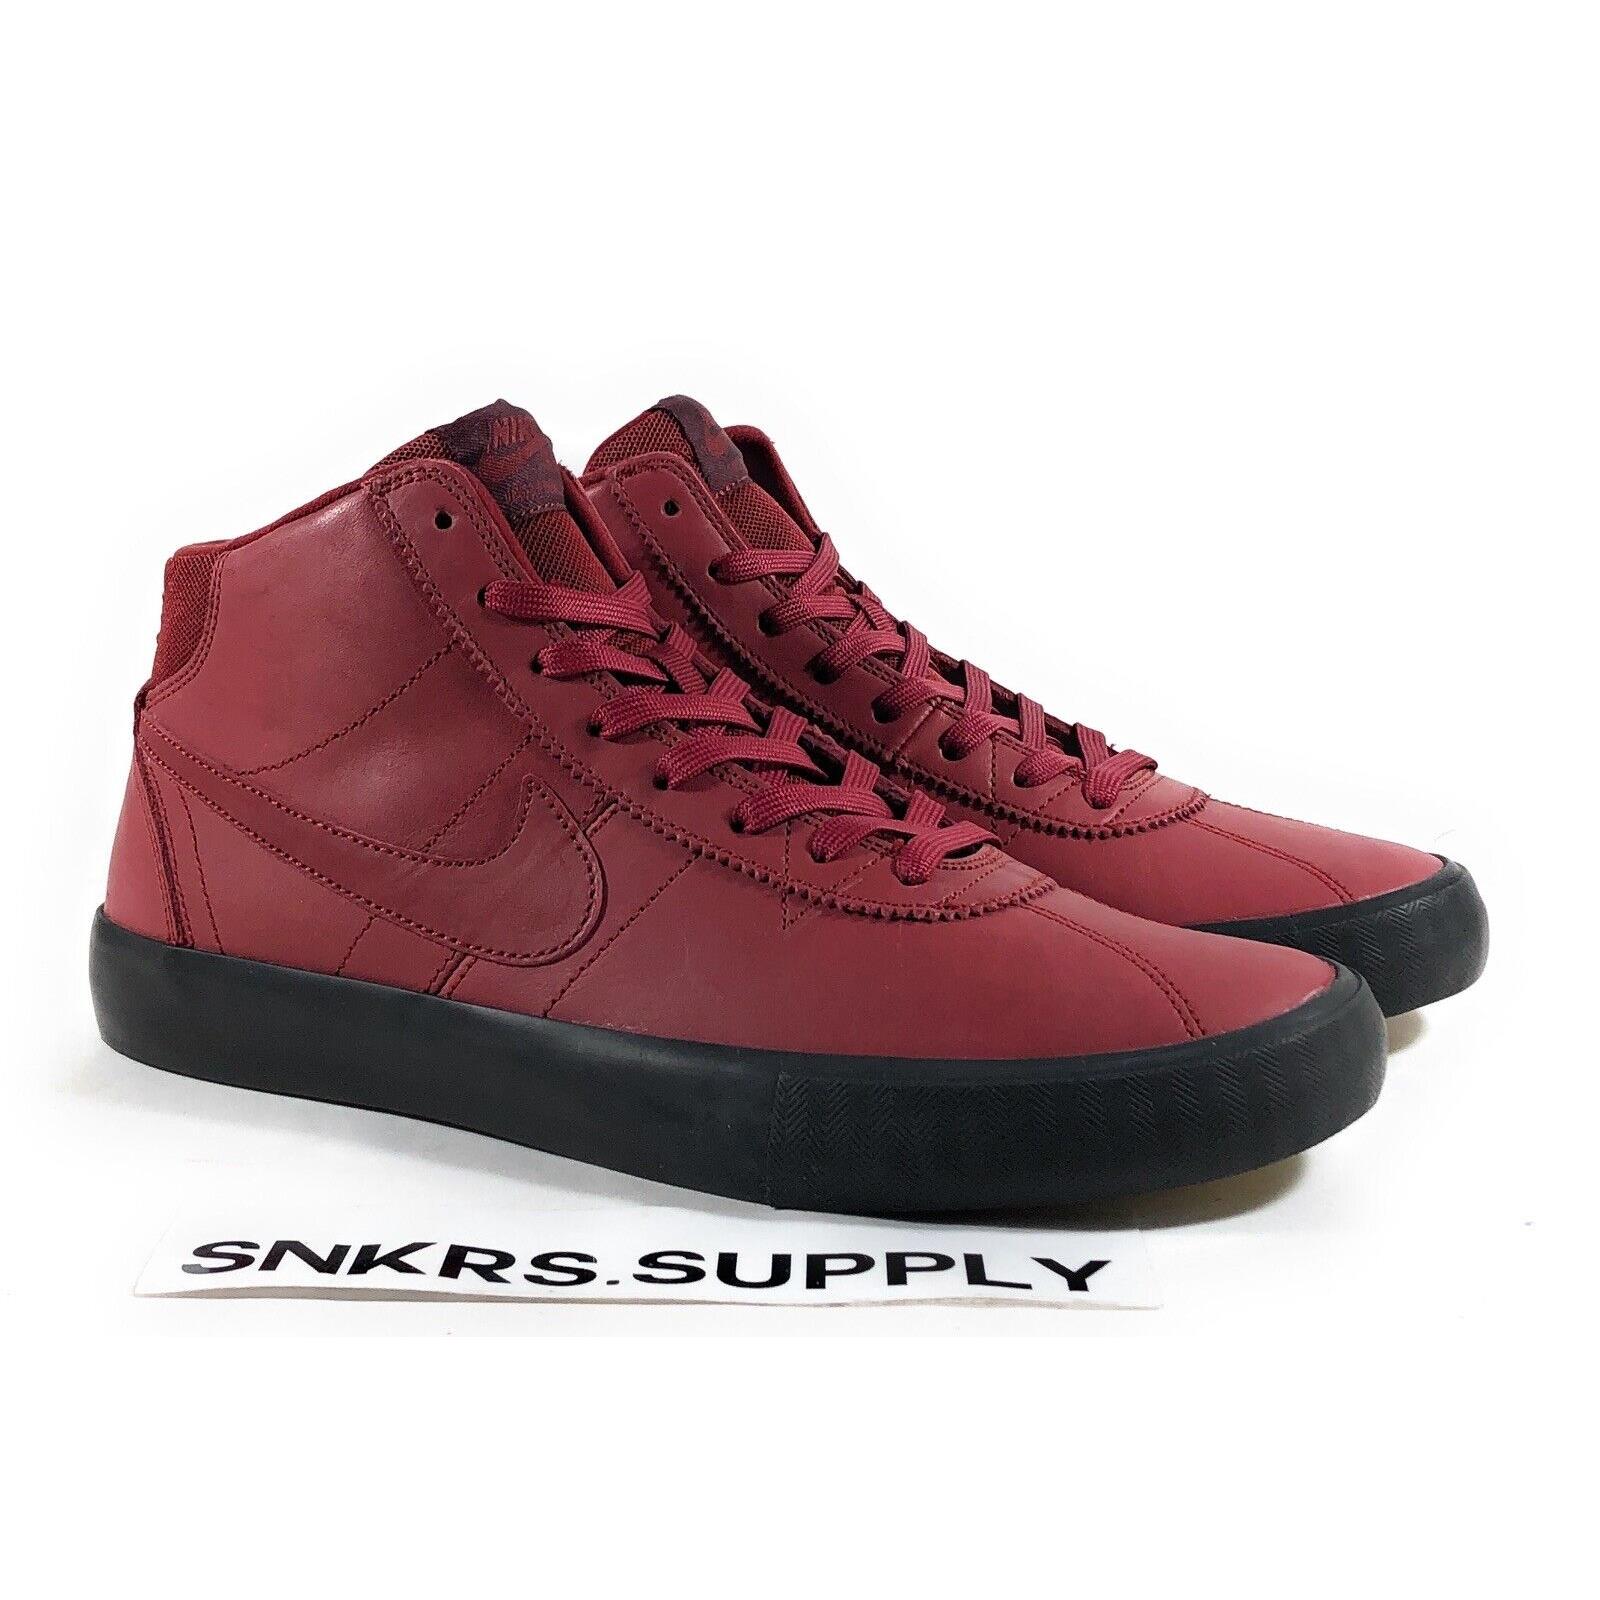 Nike shoes Bruin - Team Red, Night Maroon, Black , Team Red / Night Maroon / Black Manufacturer 7